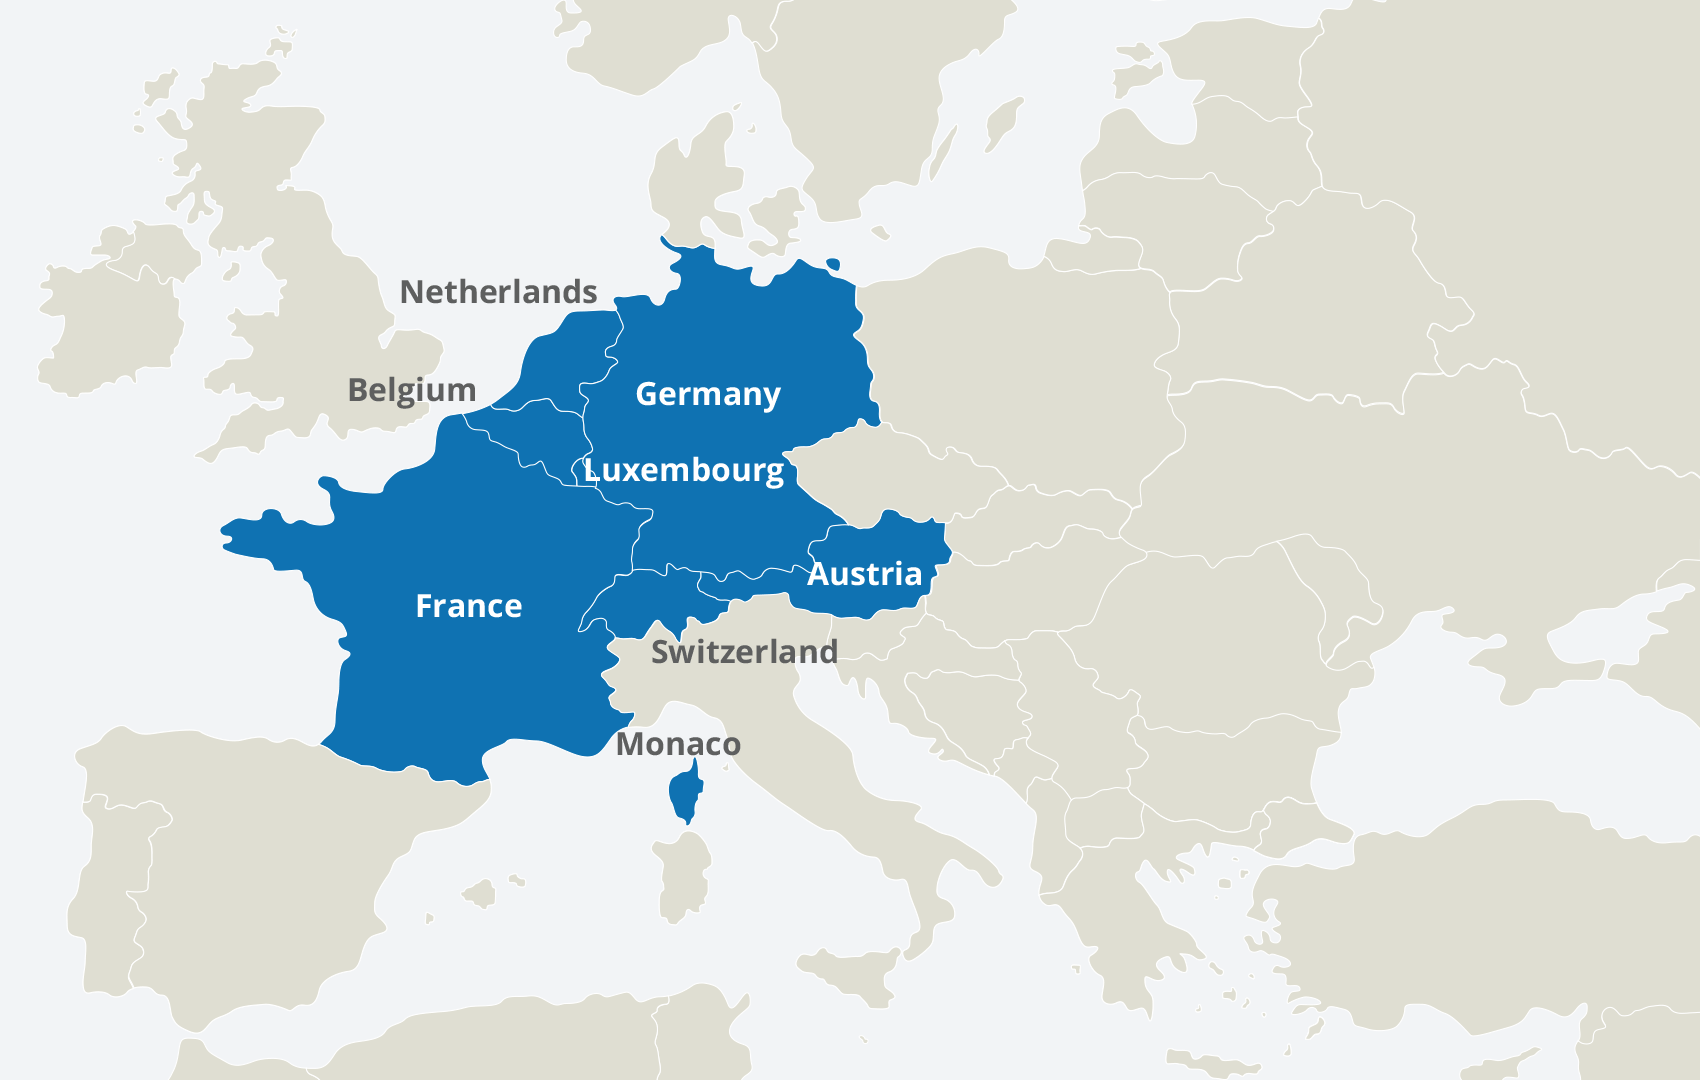 western europe map